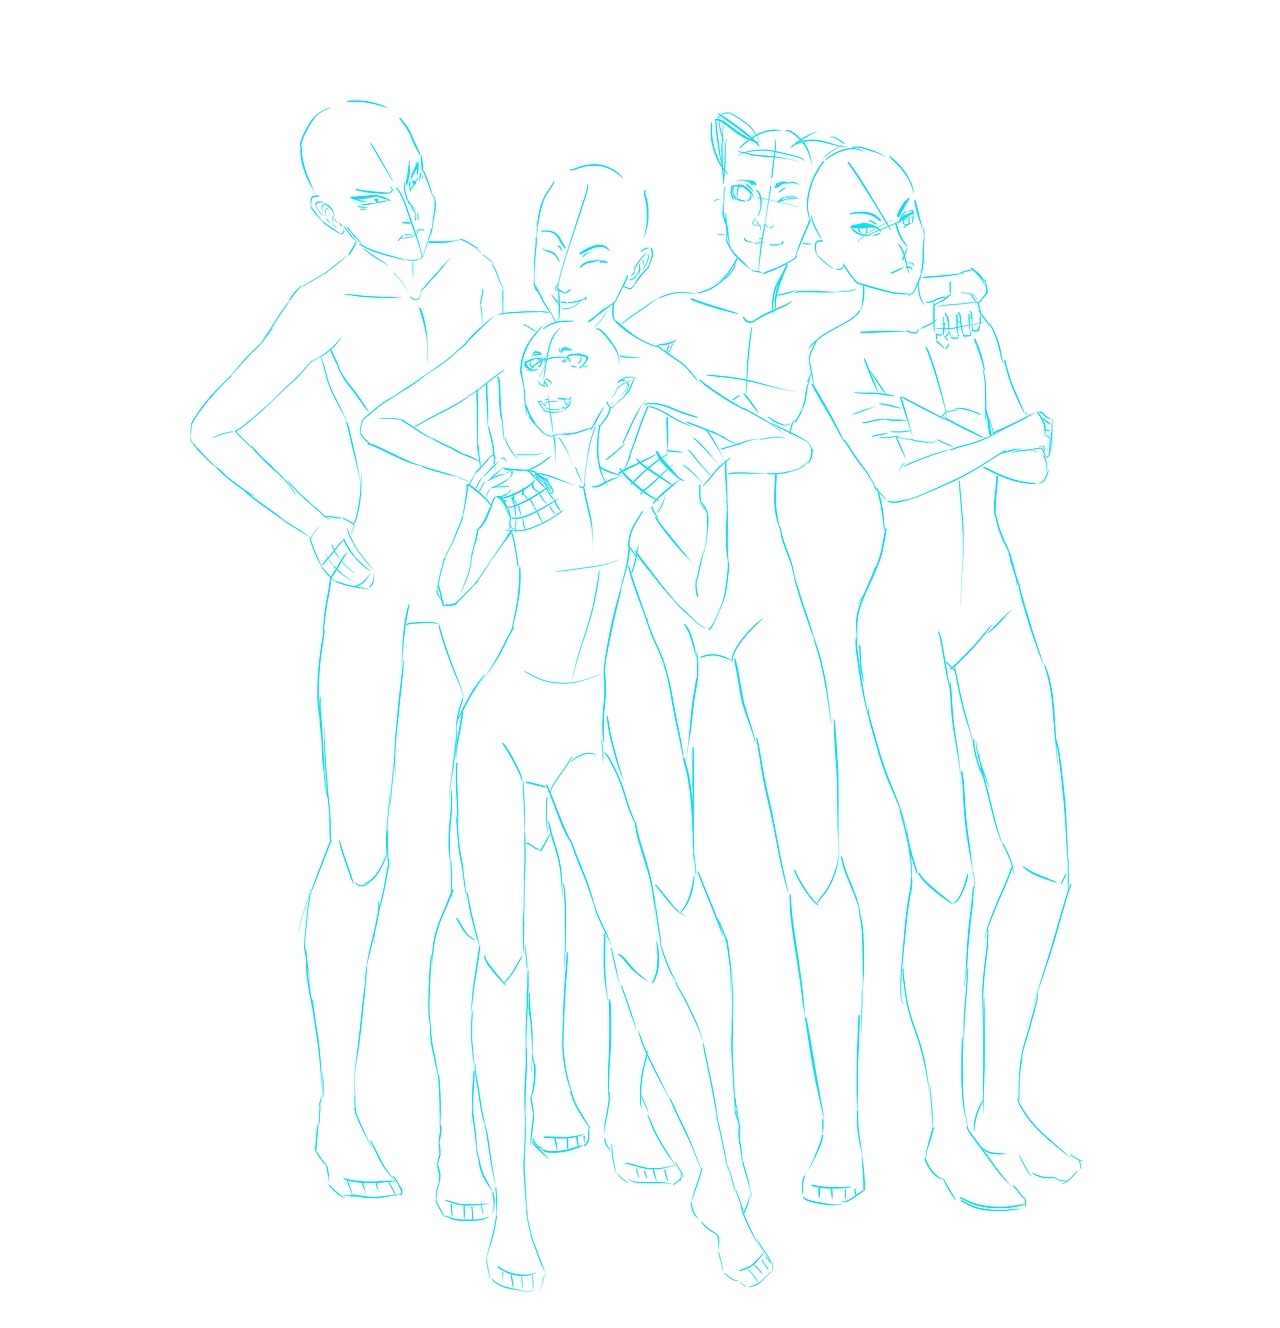 Sleepy Nova — Created another group pose! I should actually...